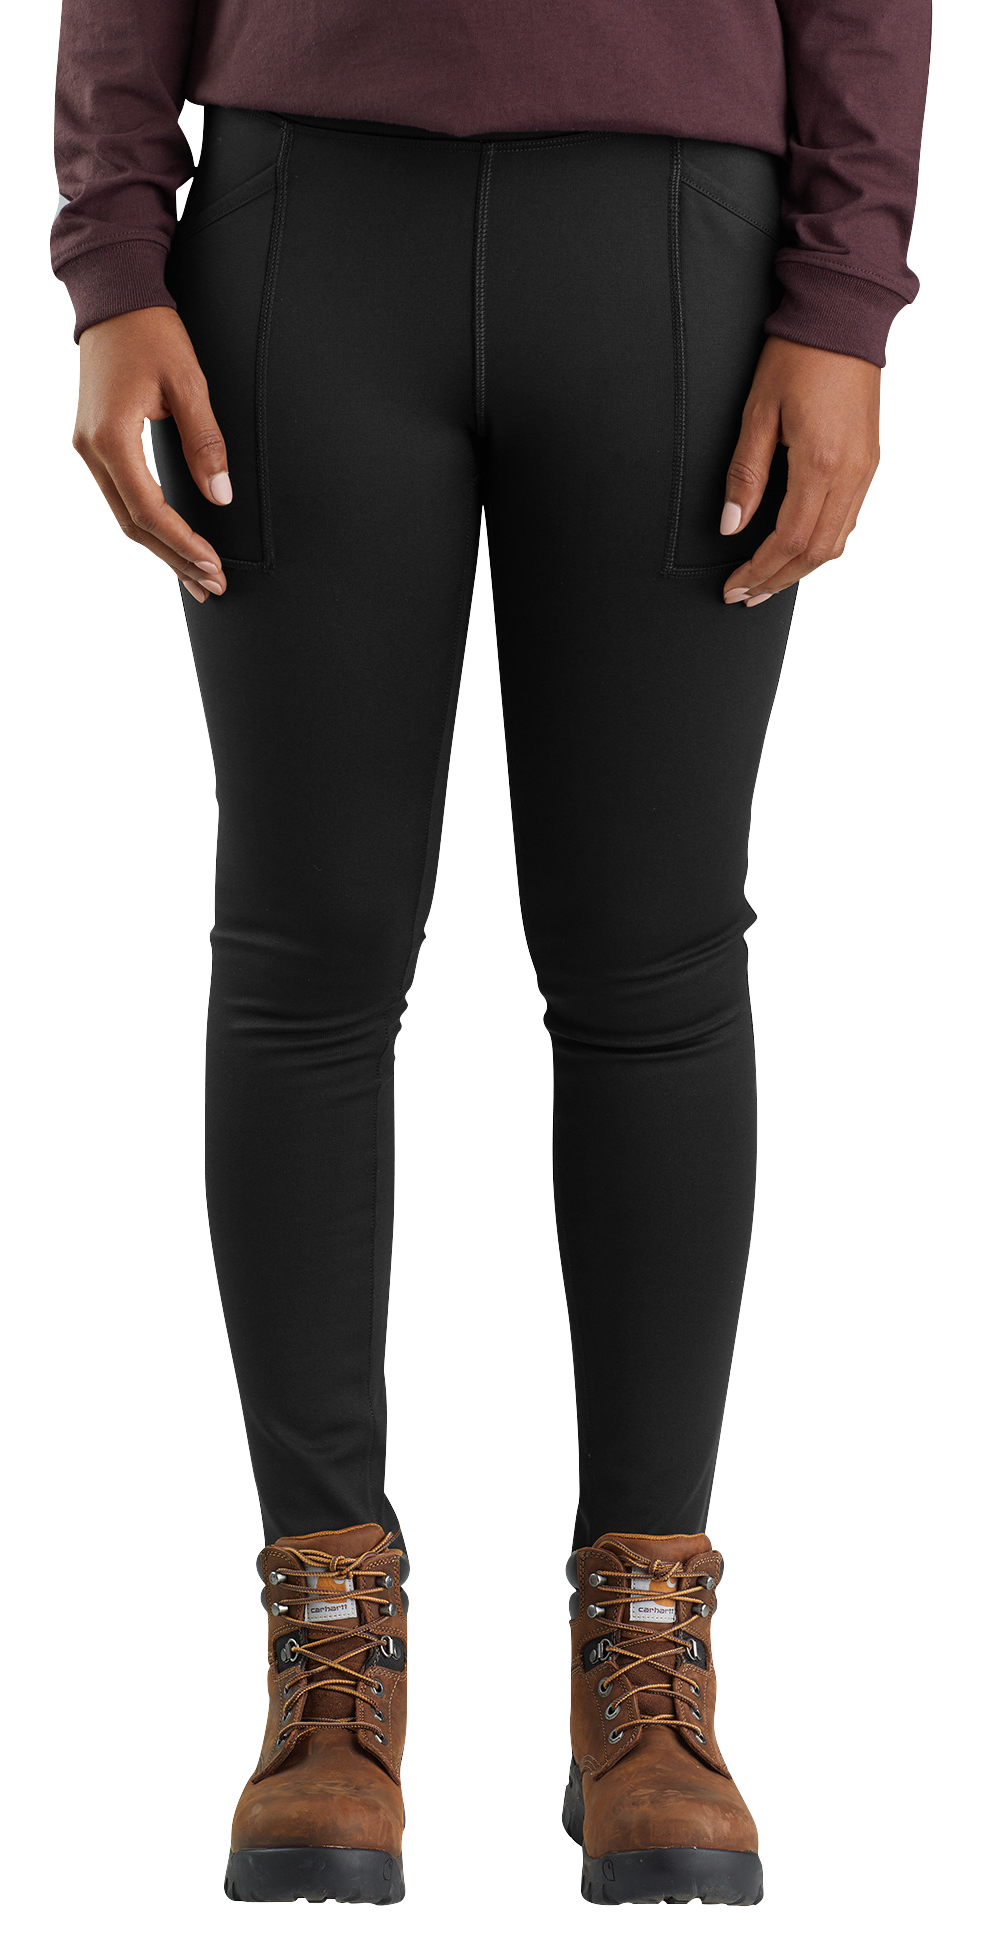 Buy Carhartt Women's Force Utility Legging Heavyweight Lined by Carhartt